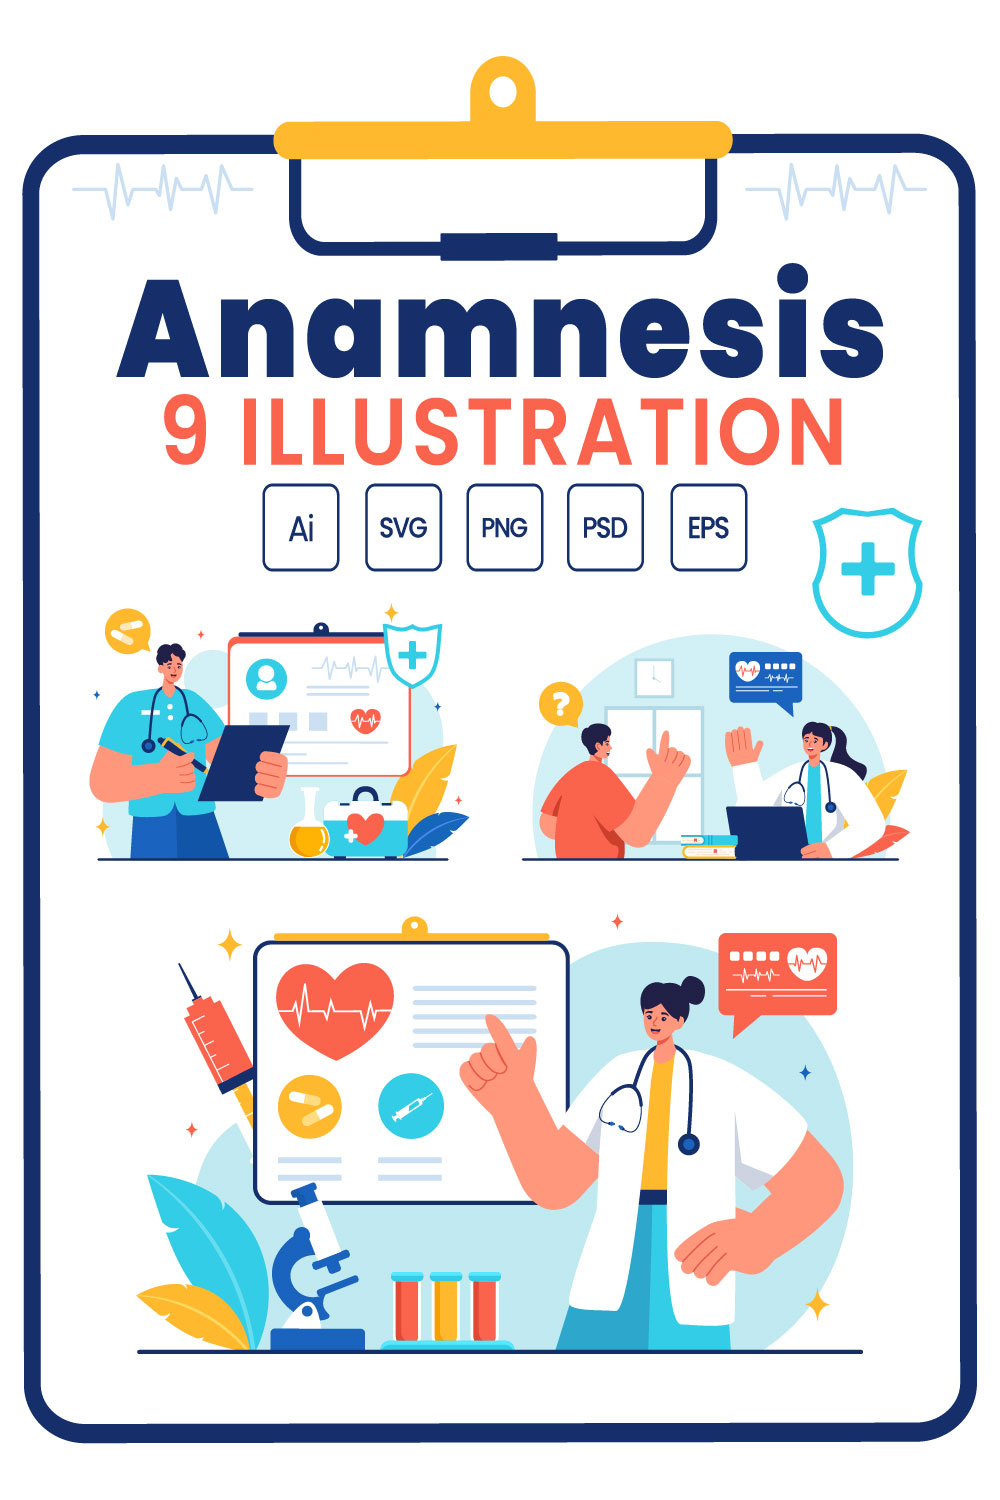 9 Anamnesis System Illustration pinterest preview image.